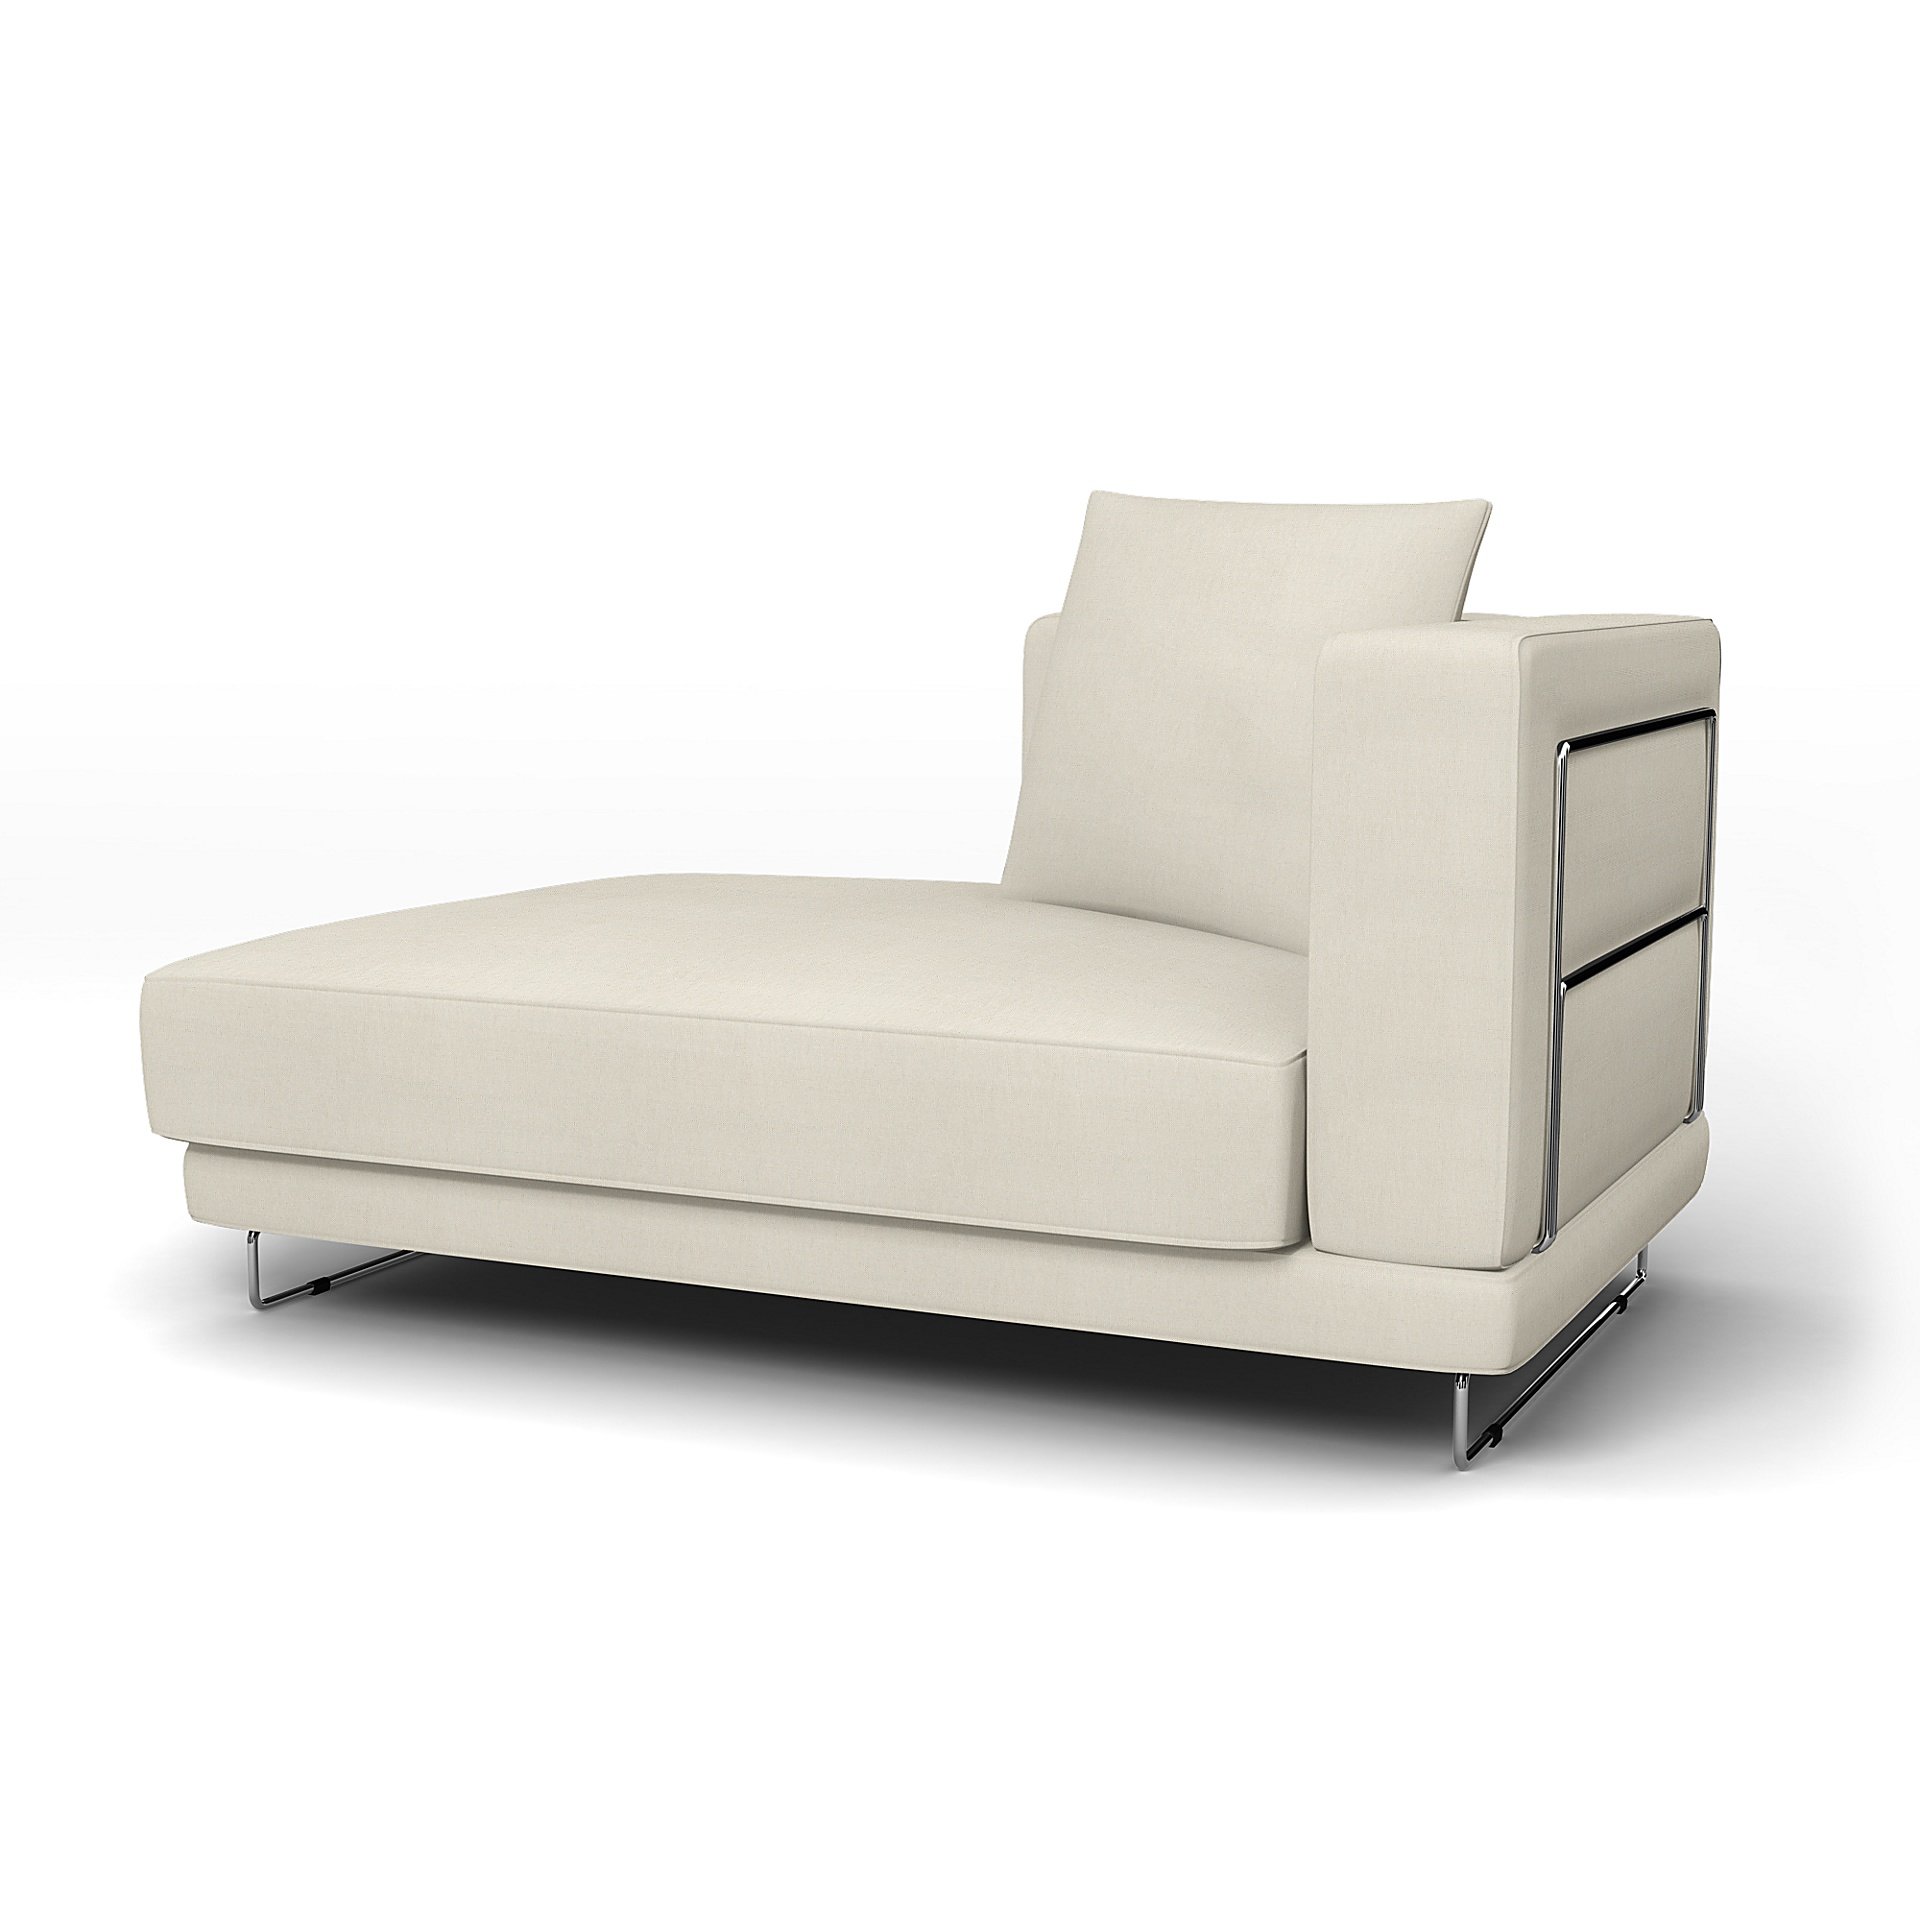 IKEA - Tylosand Chaise with Left Armrest Cover, Unbleached, Linen - Bemz